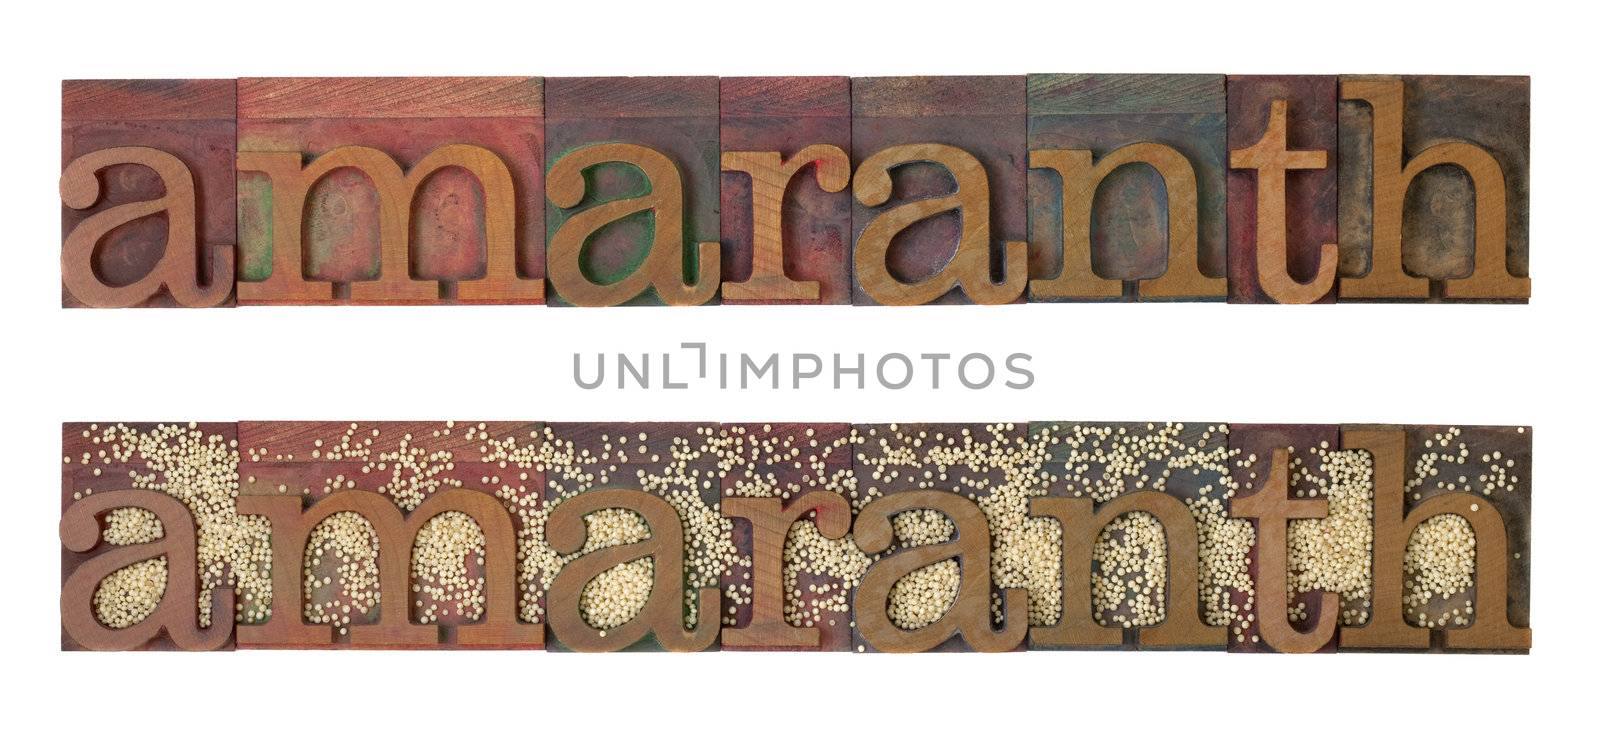 amaranth grain by PixelsAway